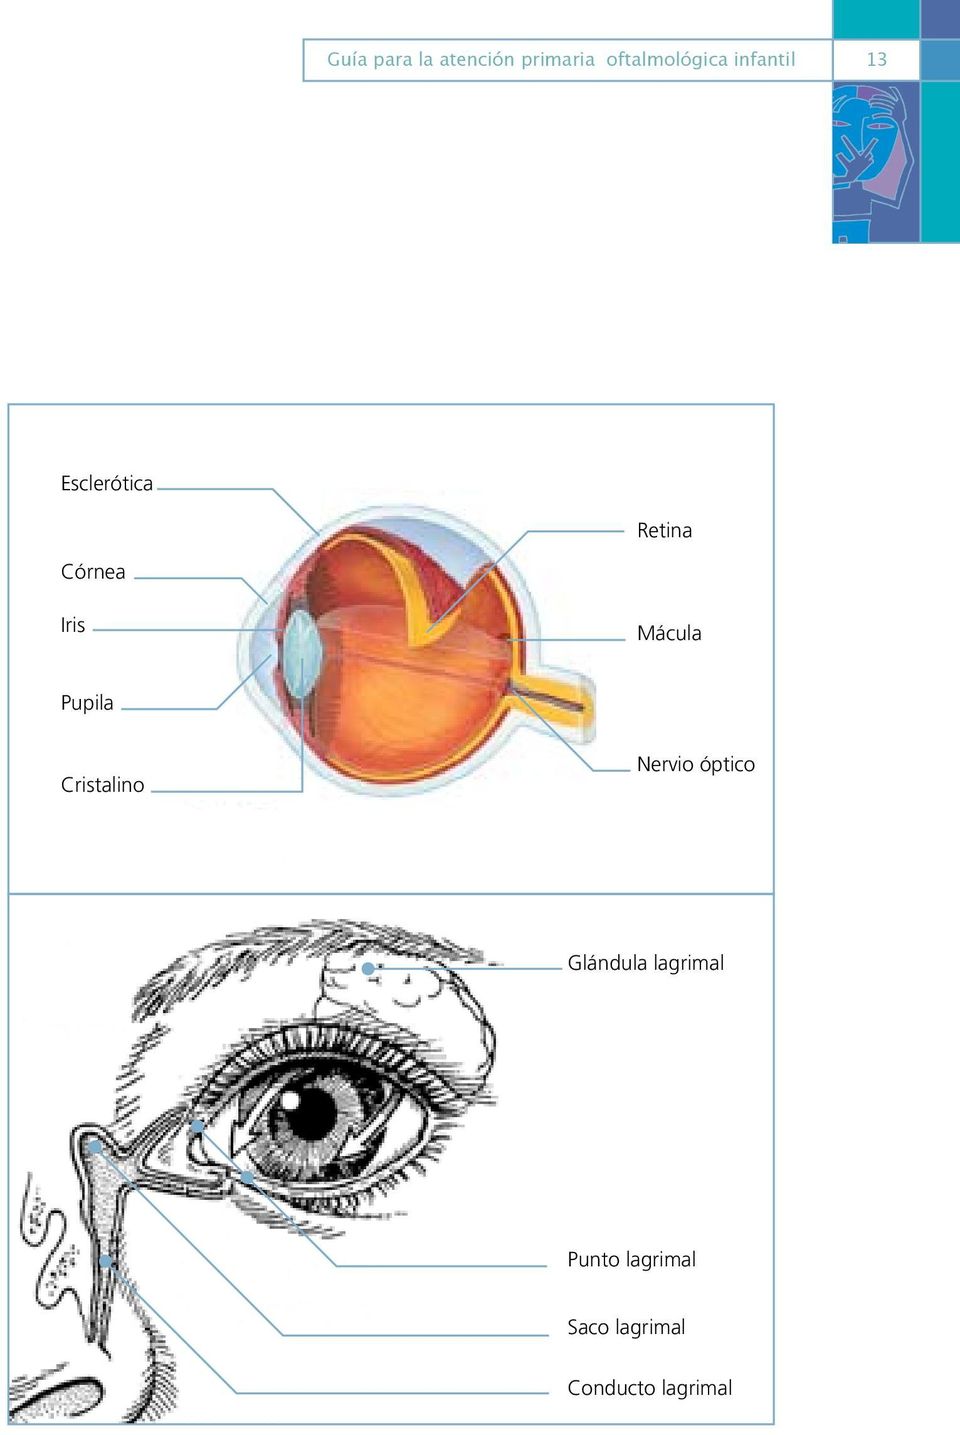 Mácula Pupila Cristalino Nervio óptico Glándula